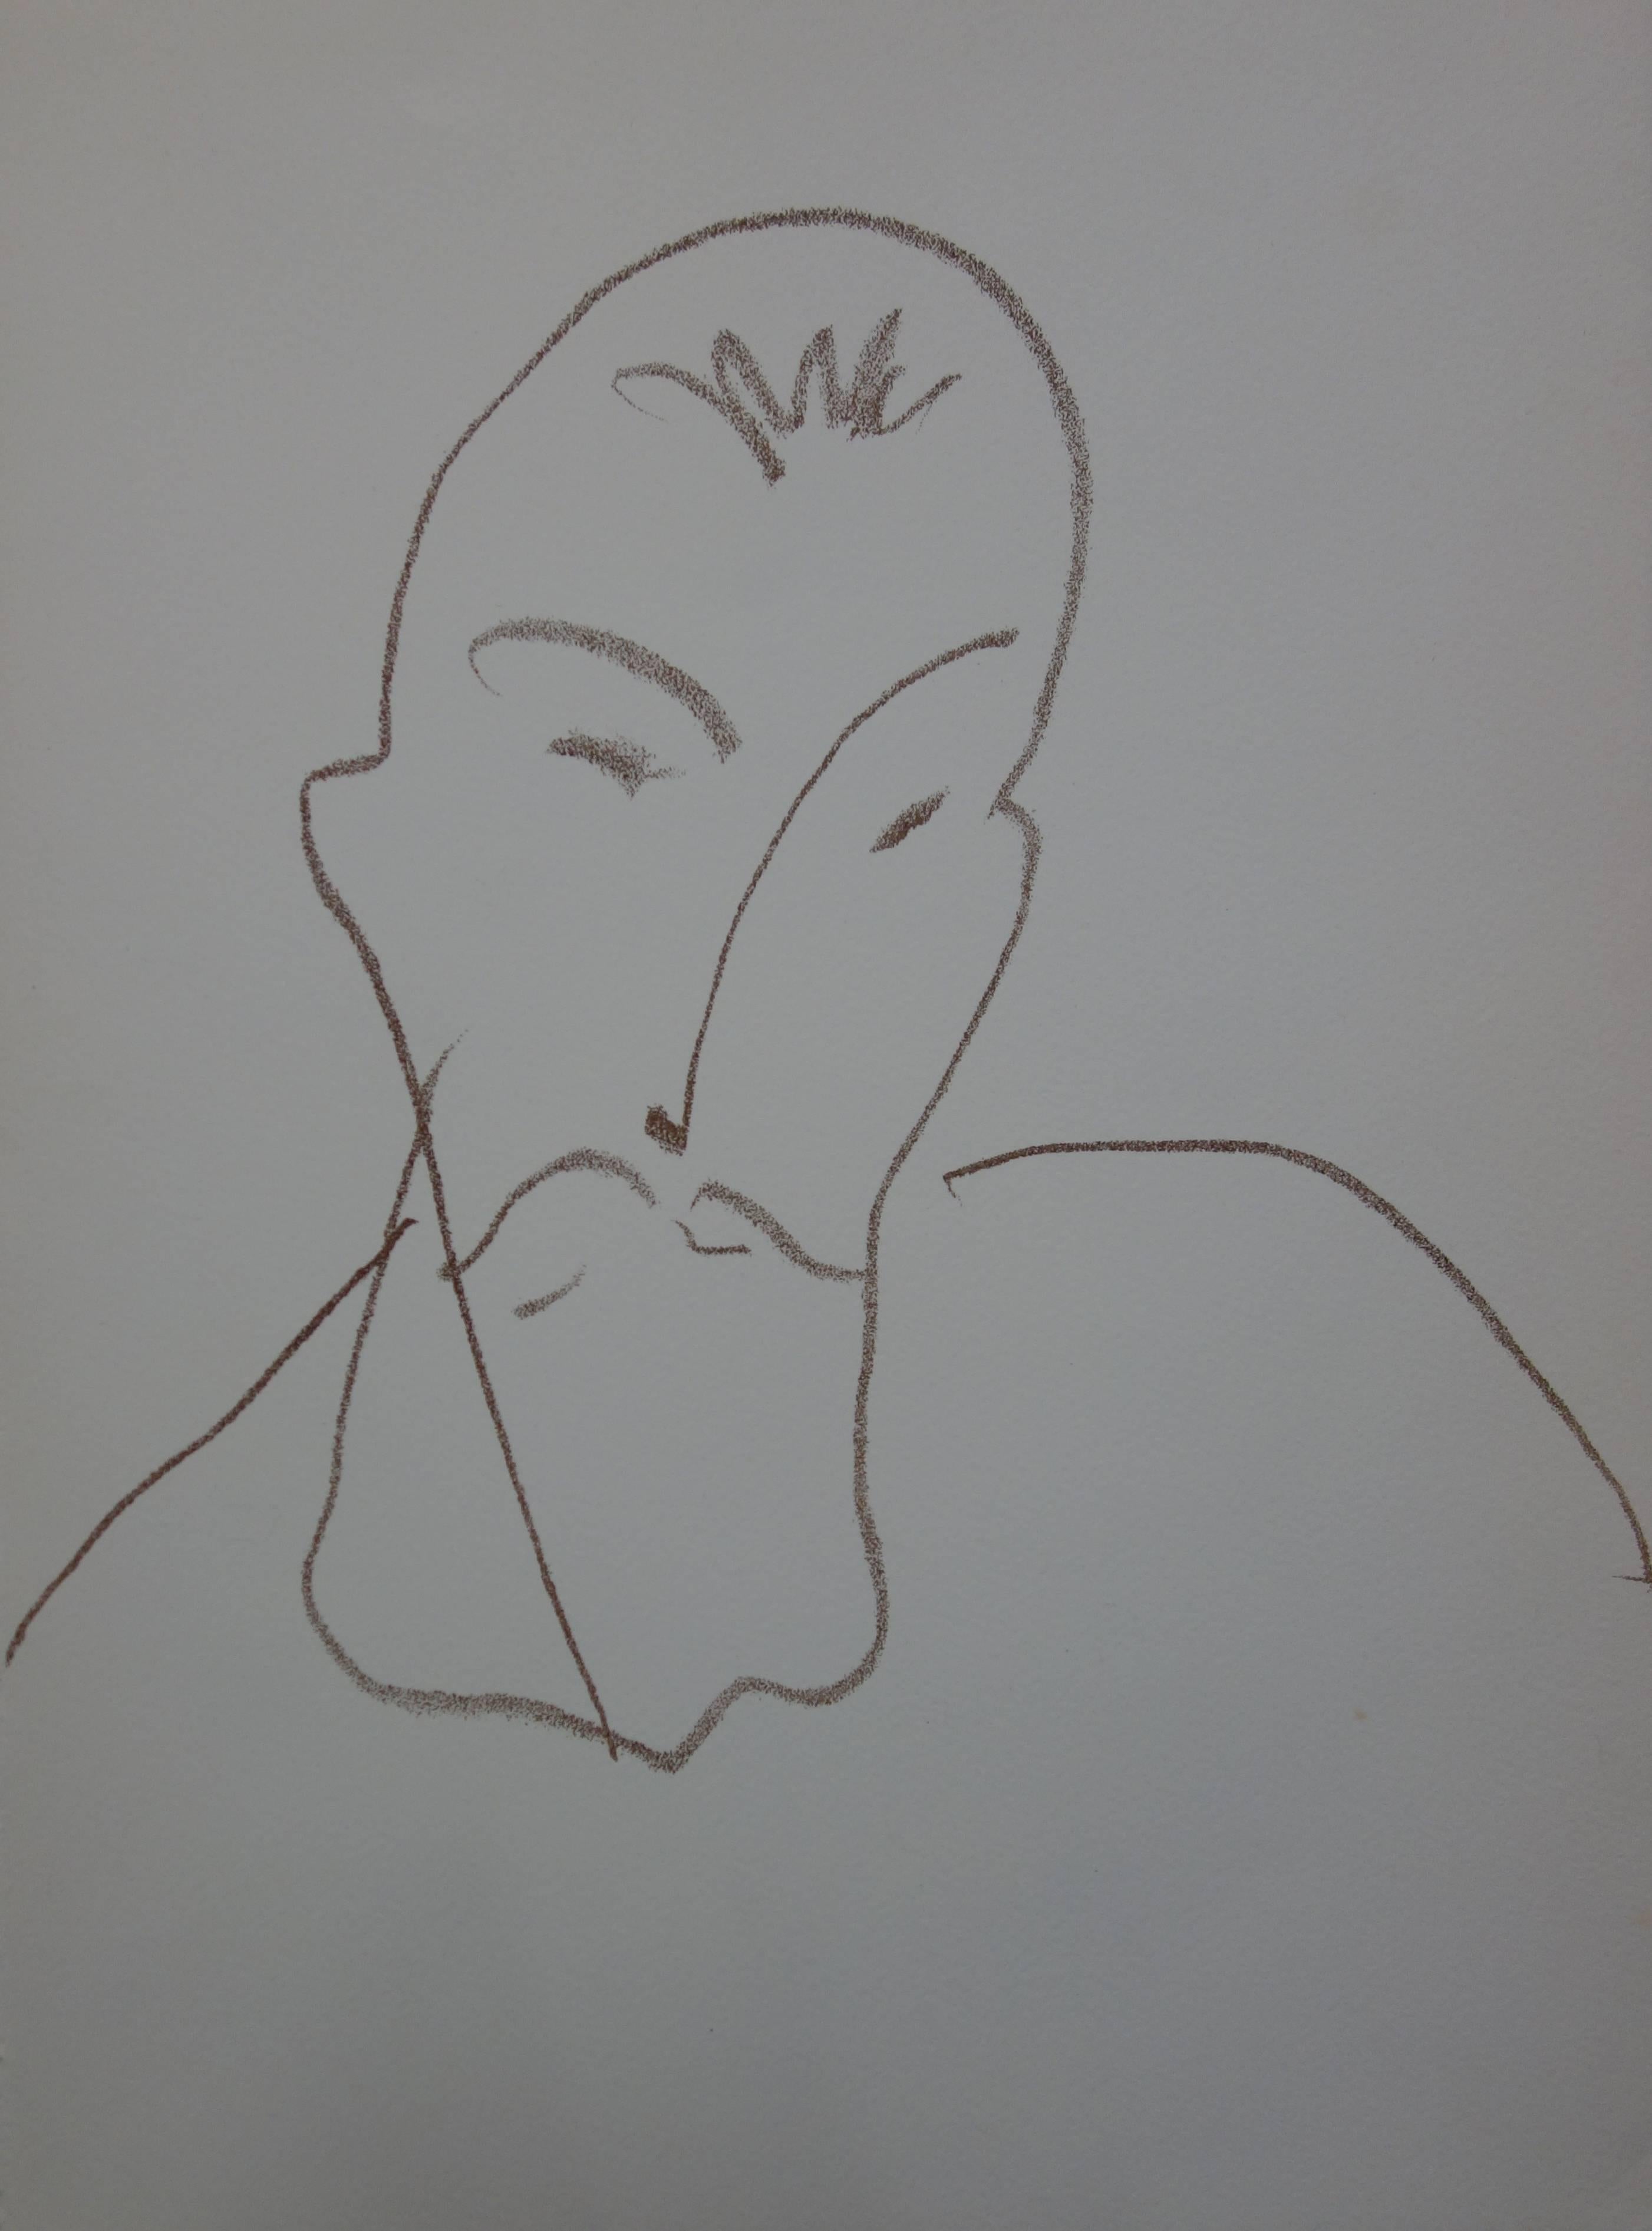 Henri Matisse (1869-1954)
Portrait of man

Original lithograph
1972
Limited/ 250
Printed on Arches vellum
Size 38 x 28 cm (c. 15 x 11")

REFERENCES : Catalog raisonné illustrated books p. 281 à 302 - n° 37

INFORMATION : Lithographs published by